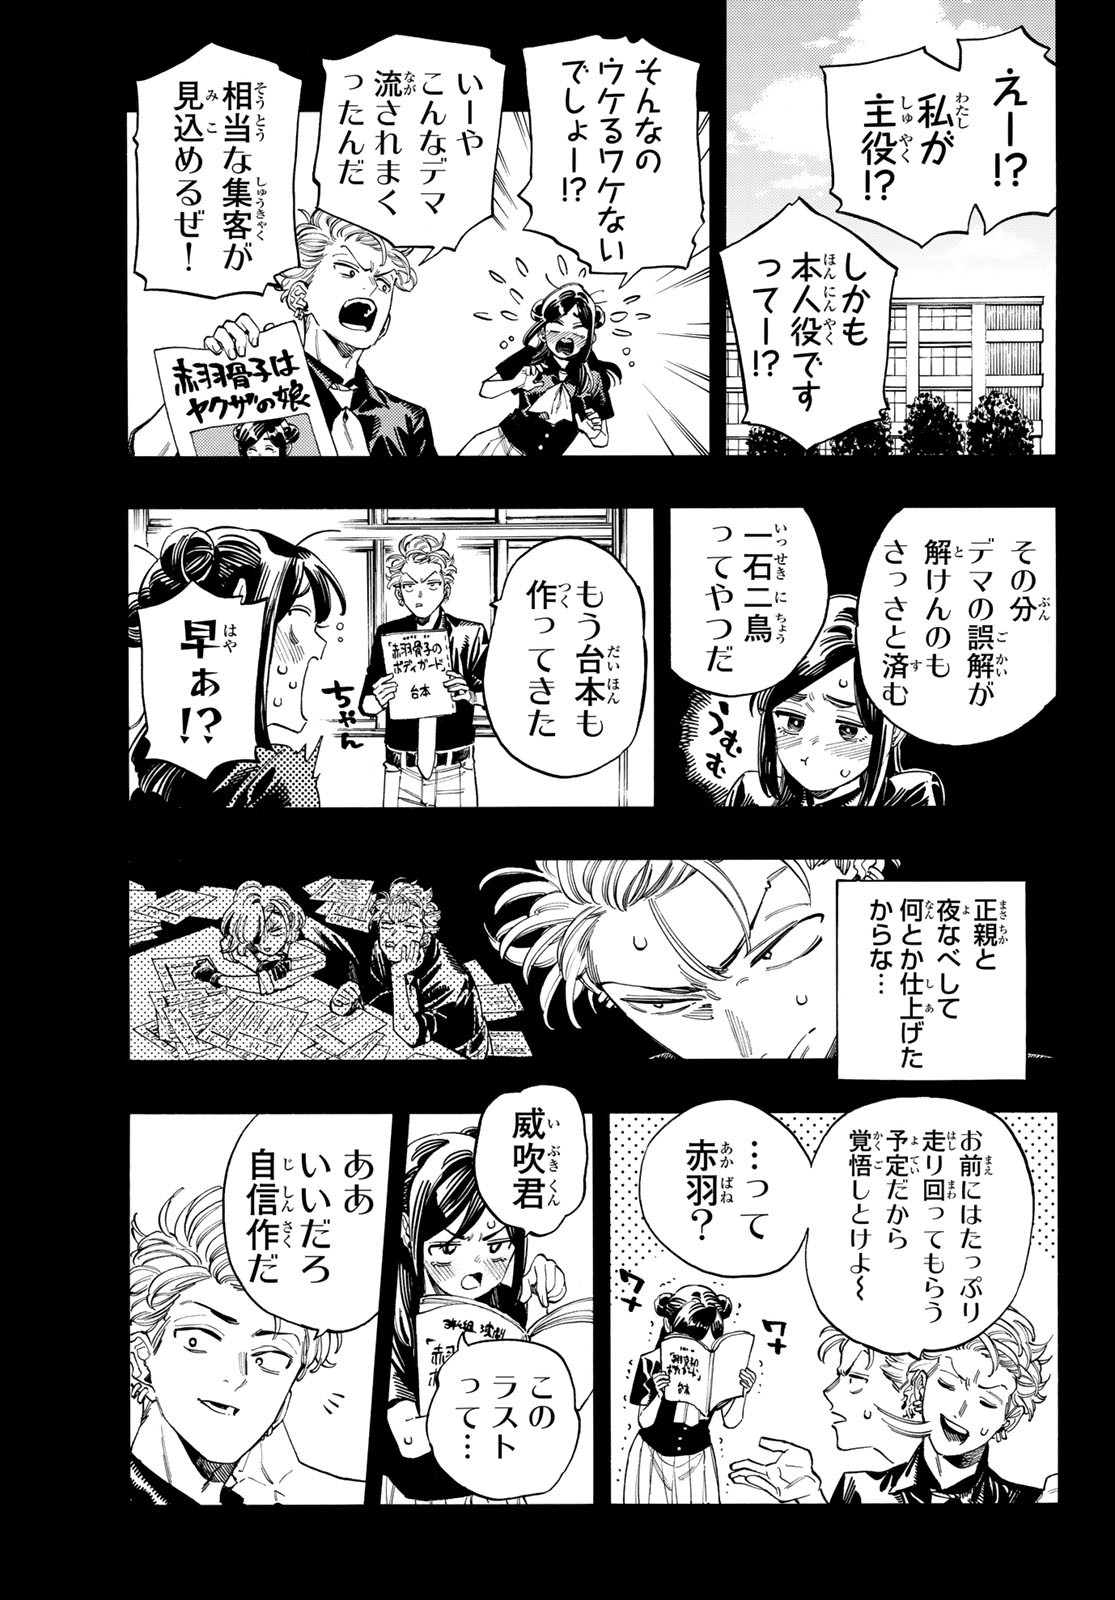 Akabane Honeko no Bodyguard - Chapter 59 - Page 3